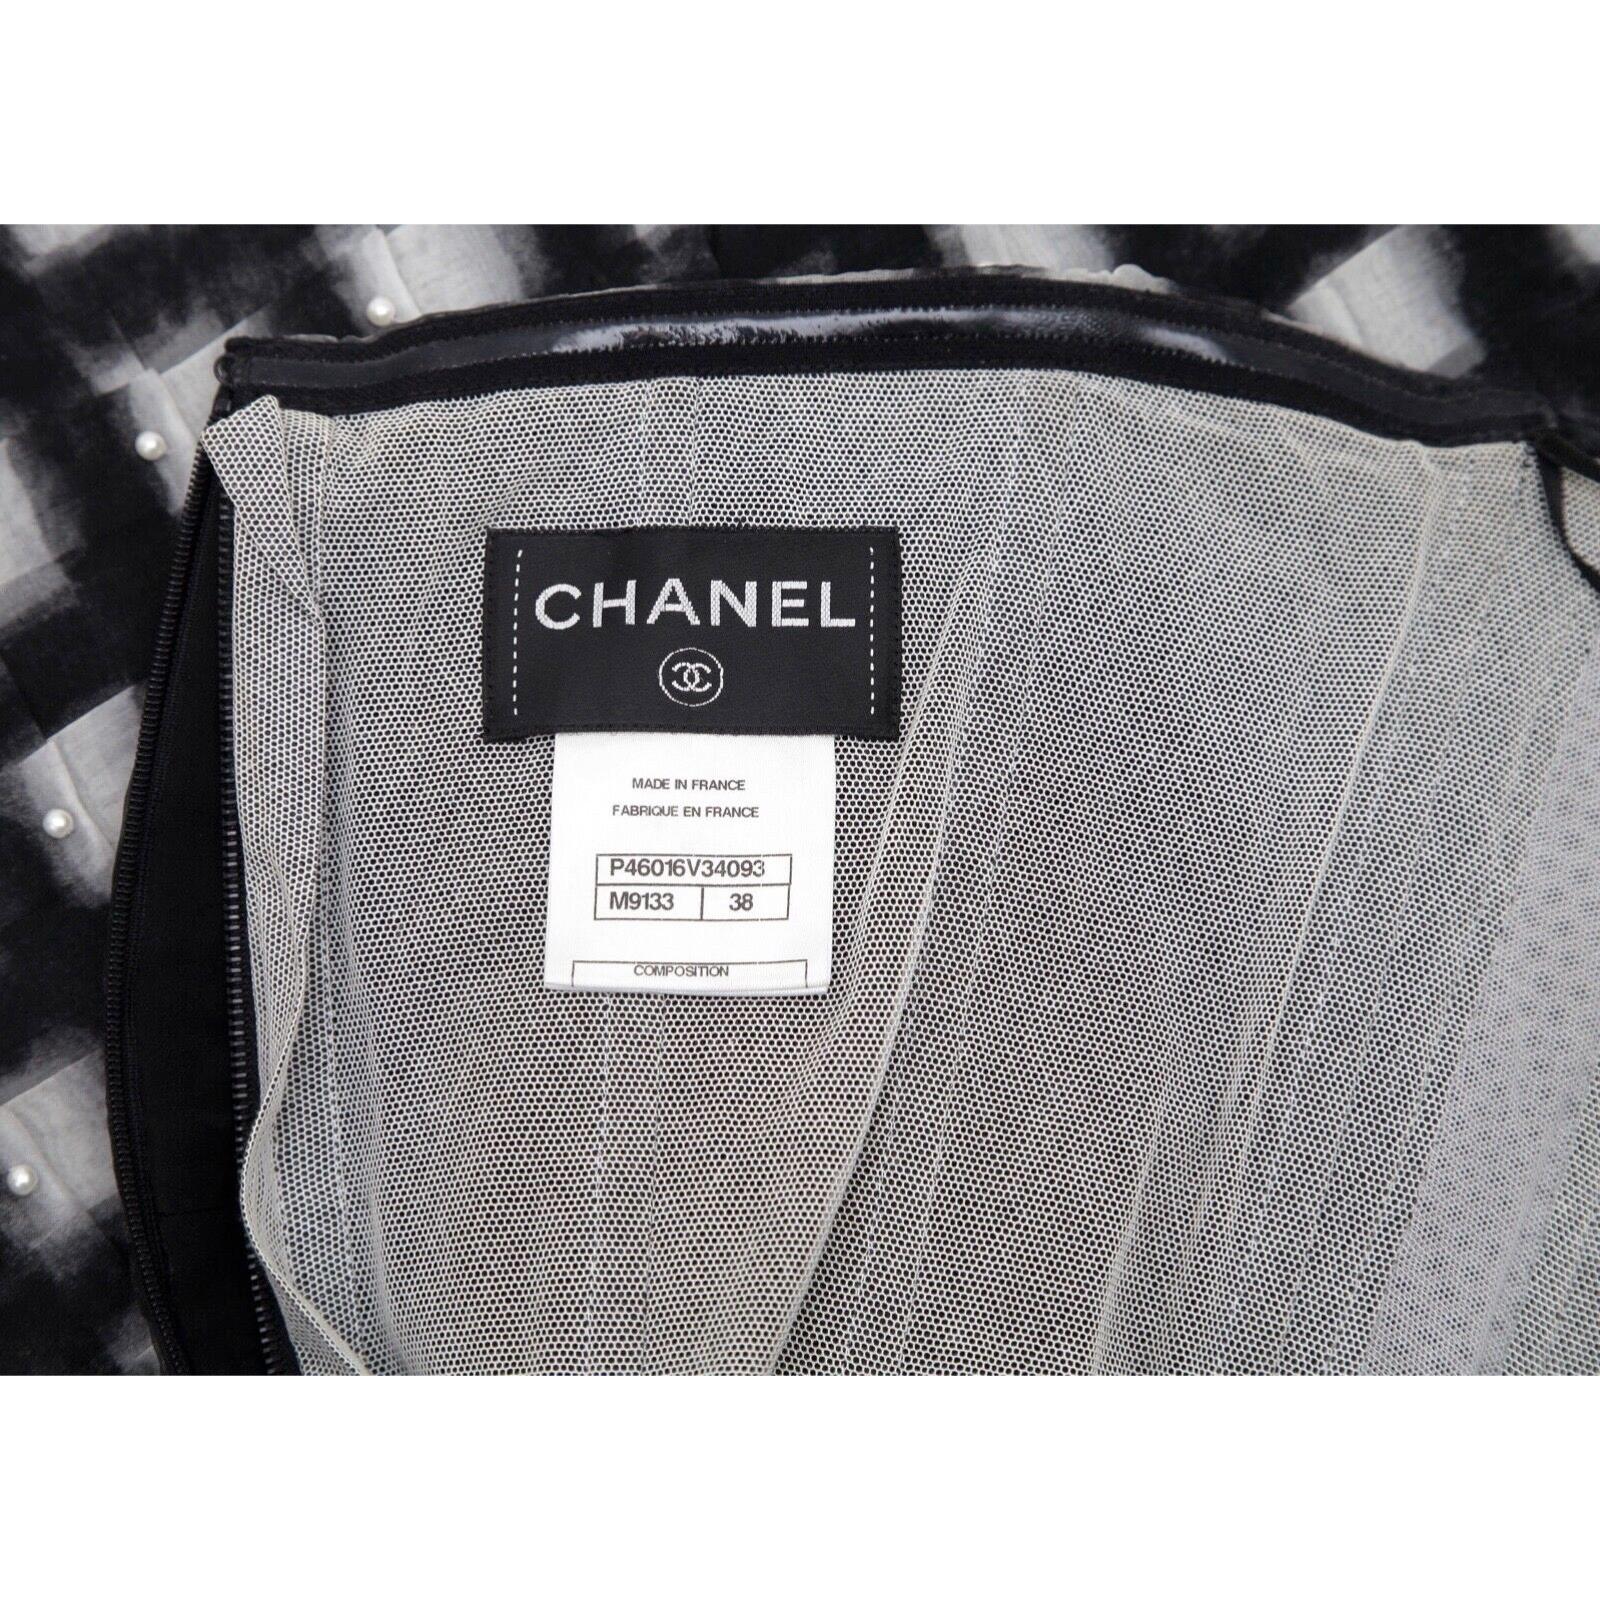 CHANEL Strapless Dress Pearls Black Checkered White RUNWAY 2013 Sz 38 4